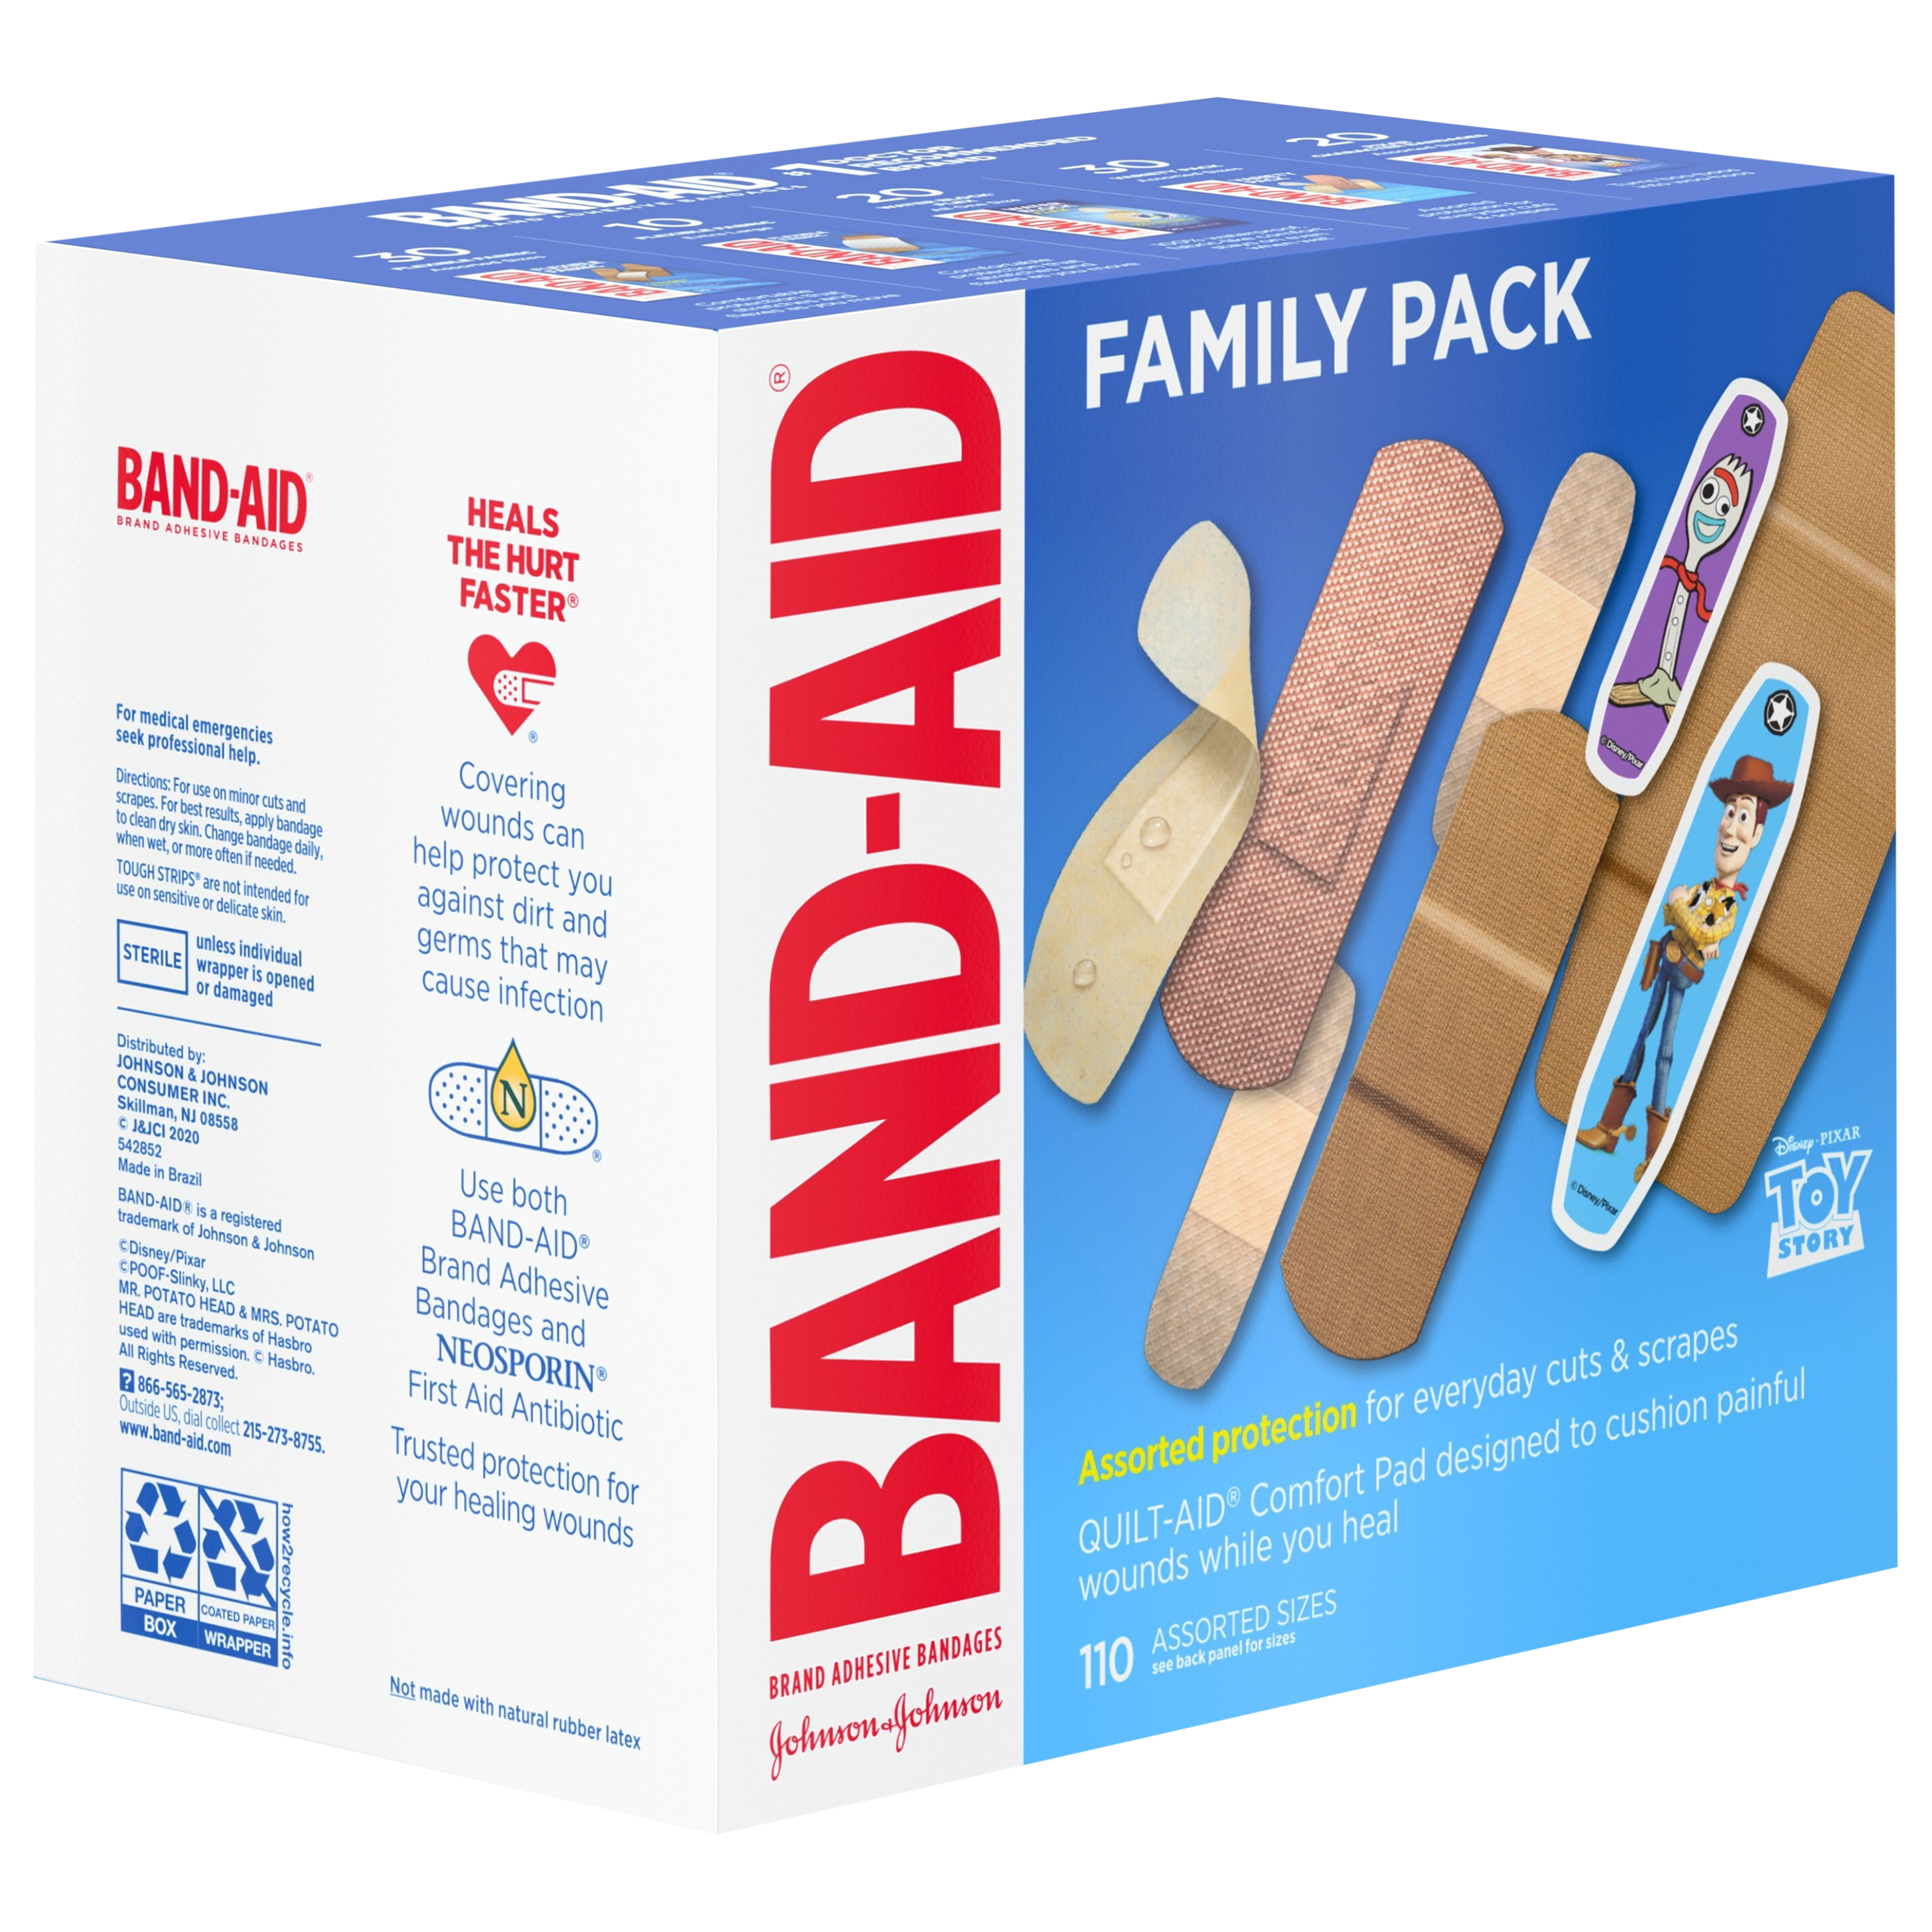 Band Aid Adhesive Bandage Family Variety Pack, Assorted Sizes, 30 Ct